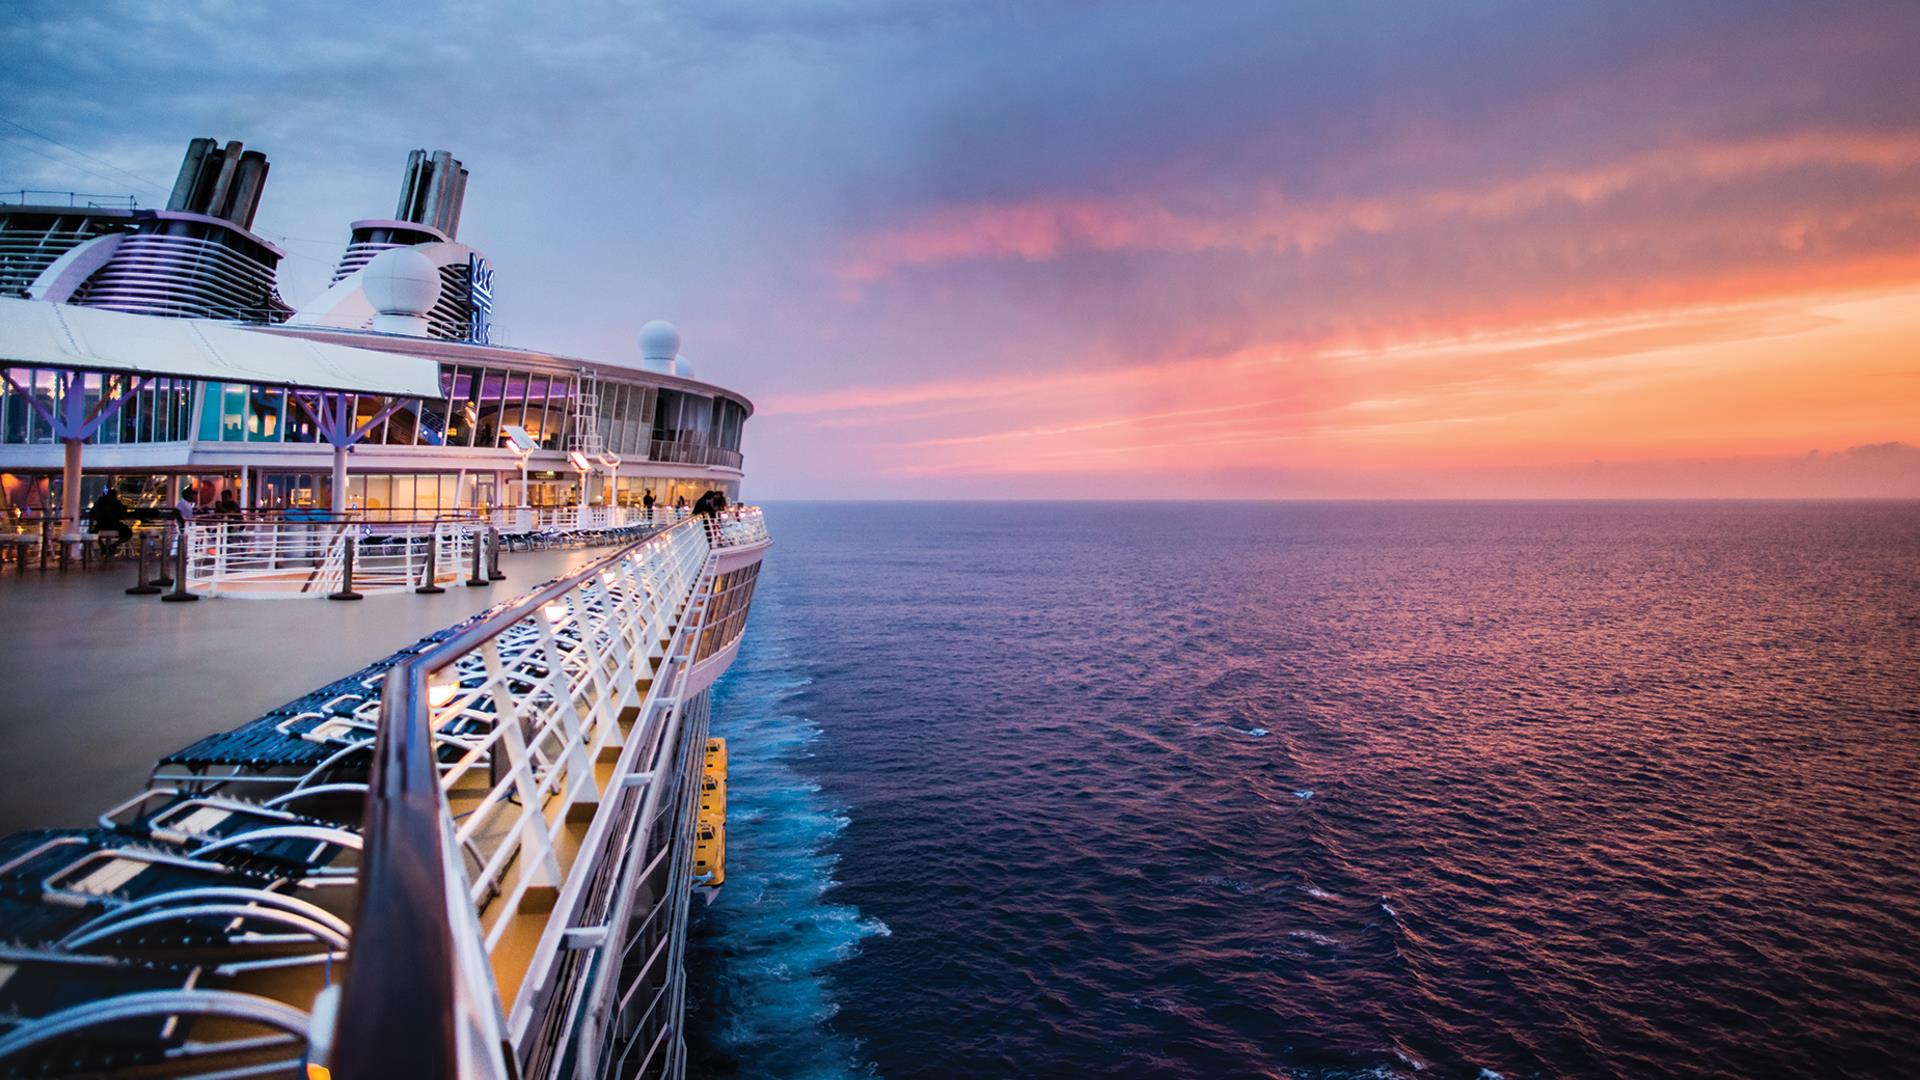 First Royal Caribbean cruise in 9 months will sail tomorrow LaptrinhX